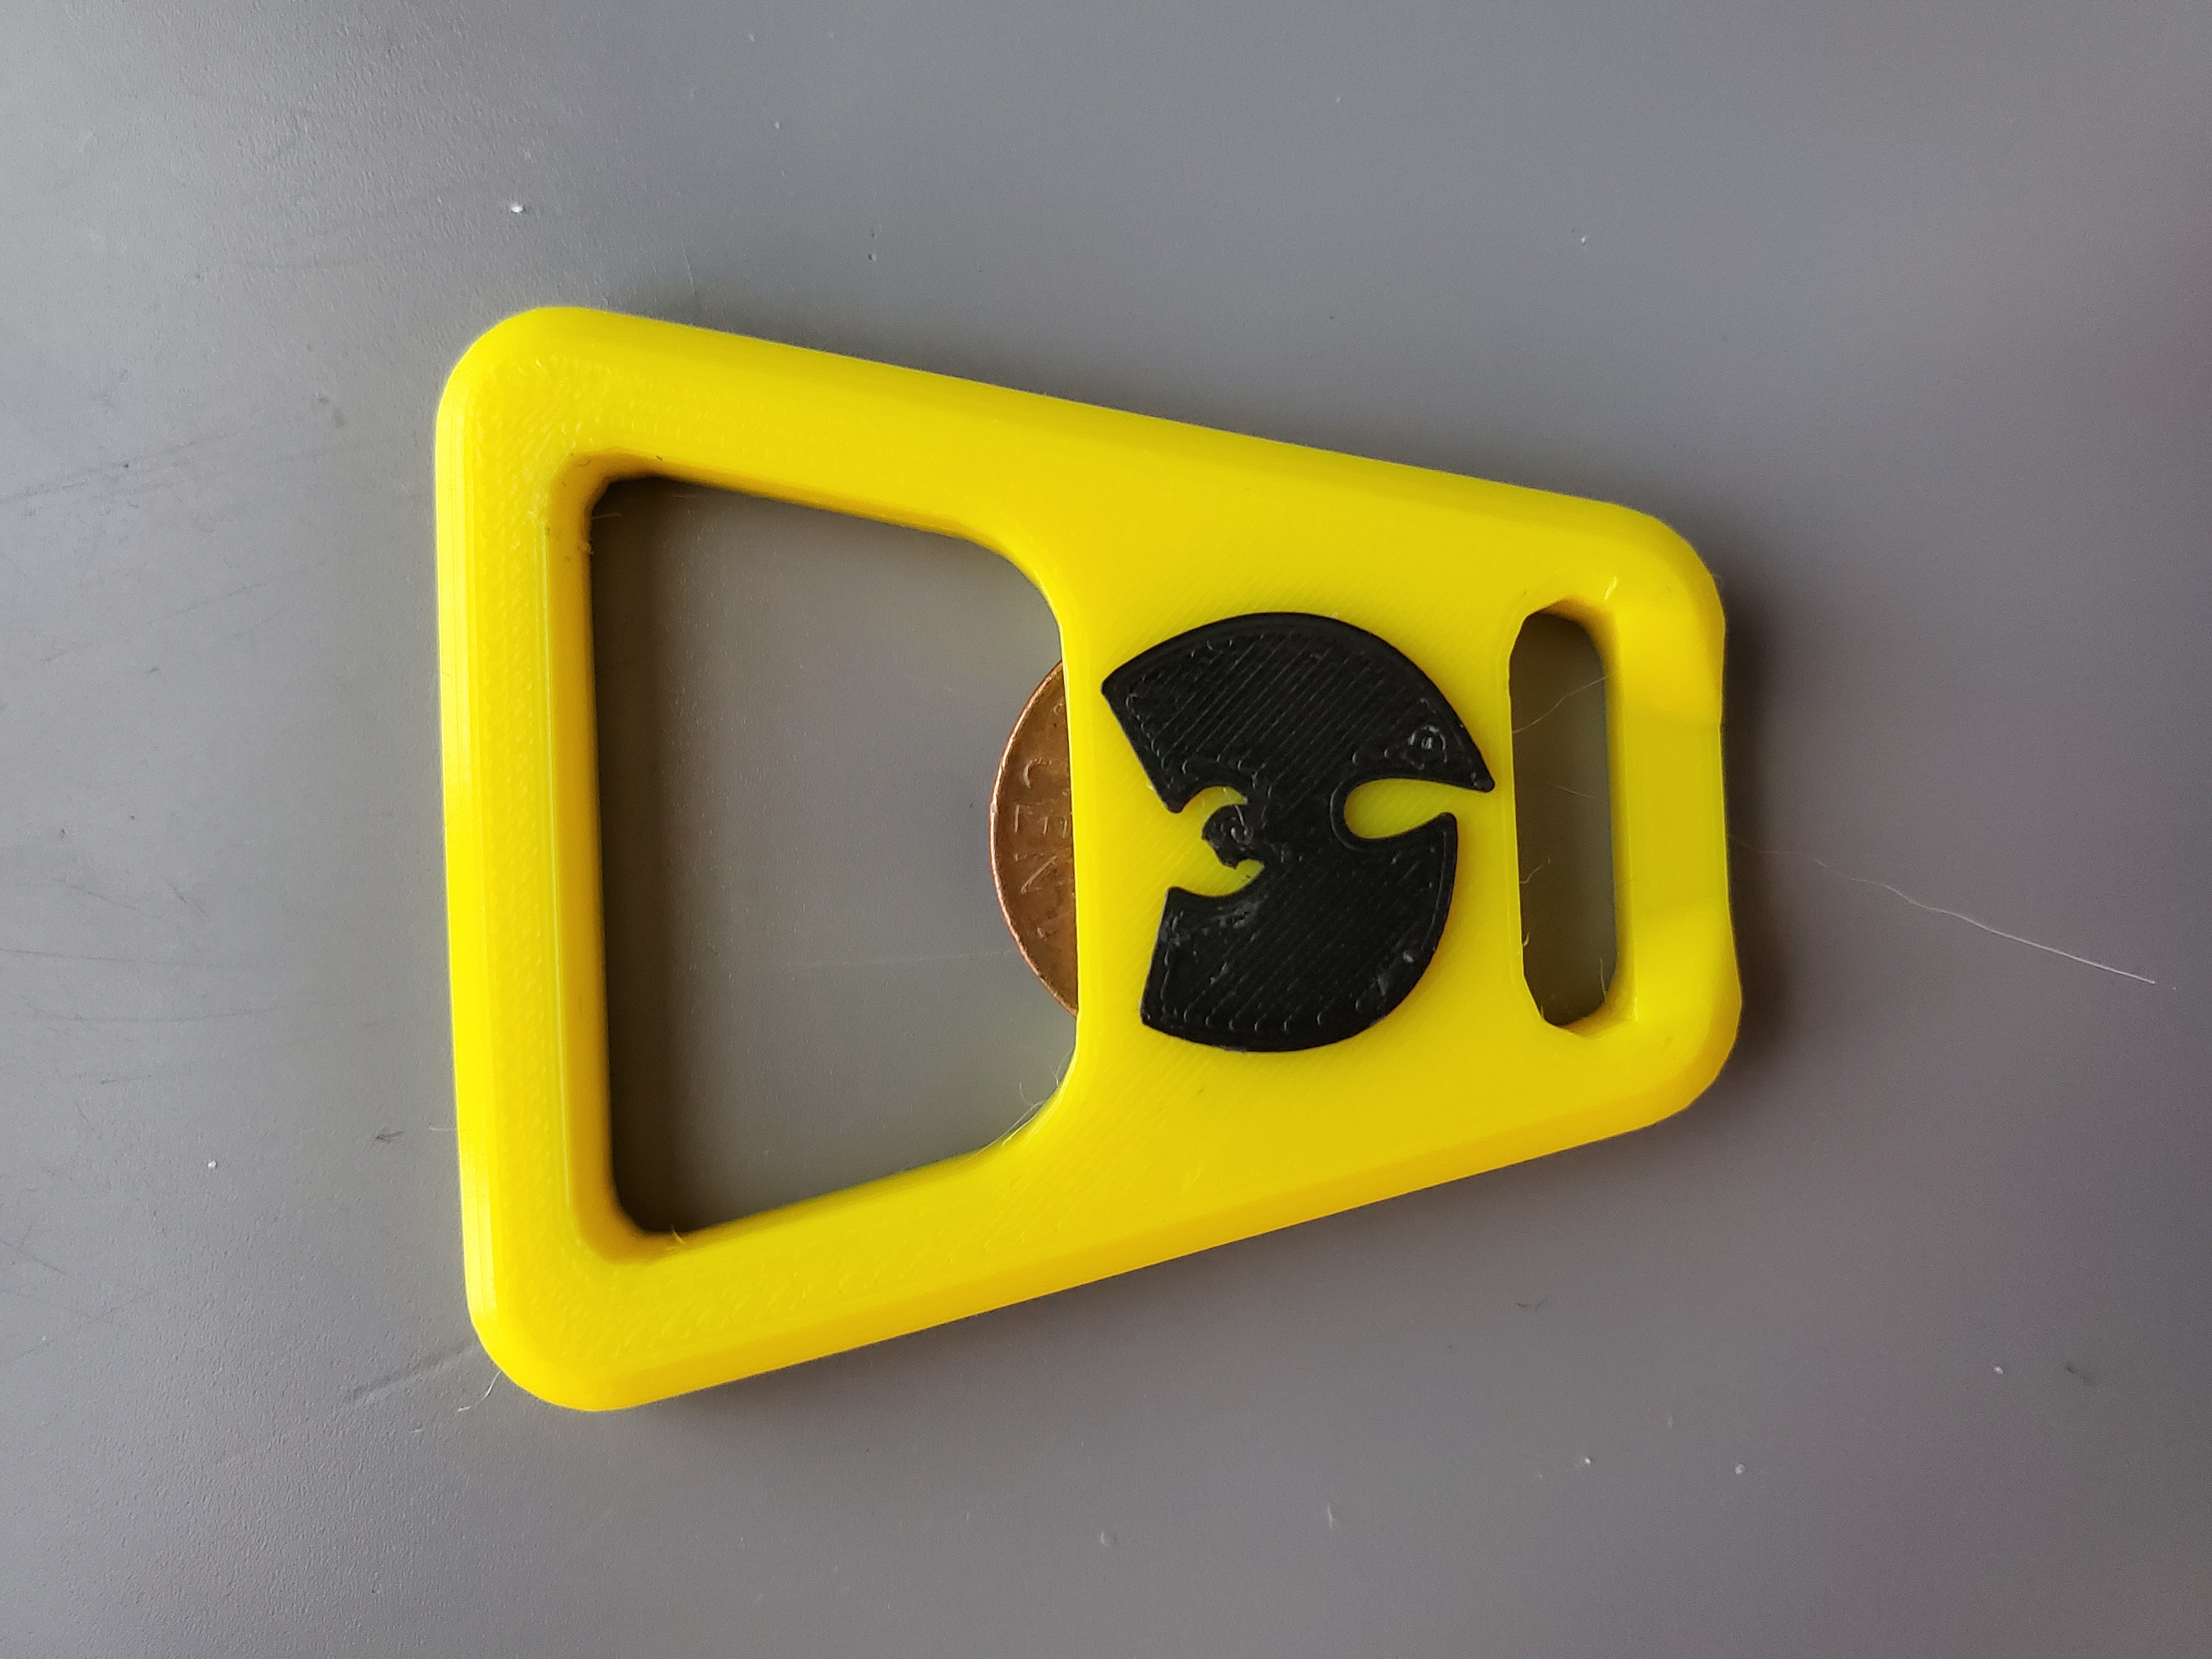 Wu-tang bottle opener for keychain